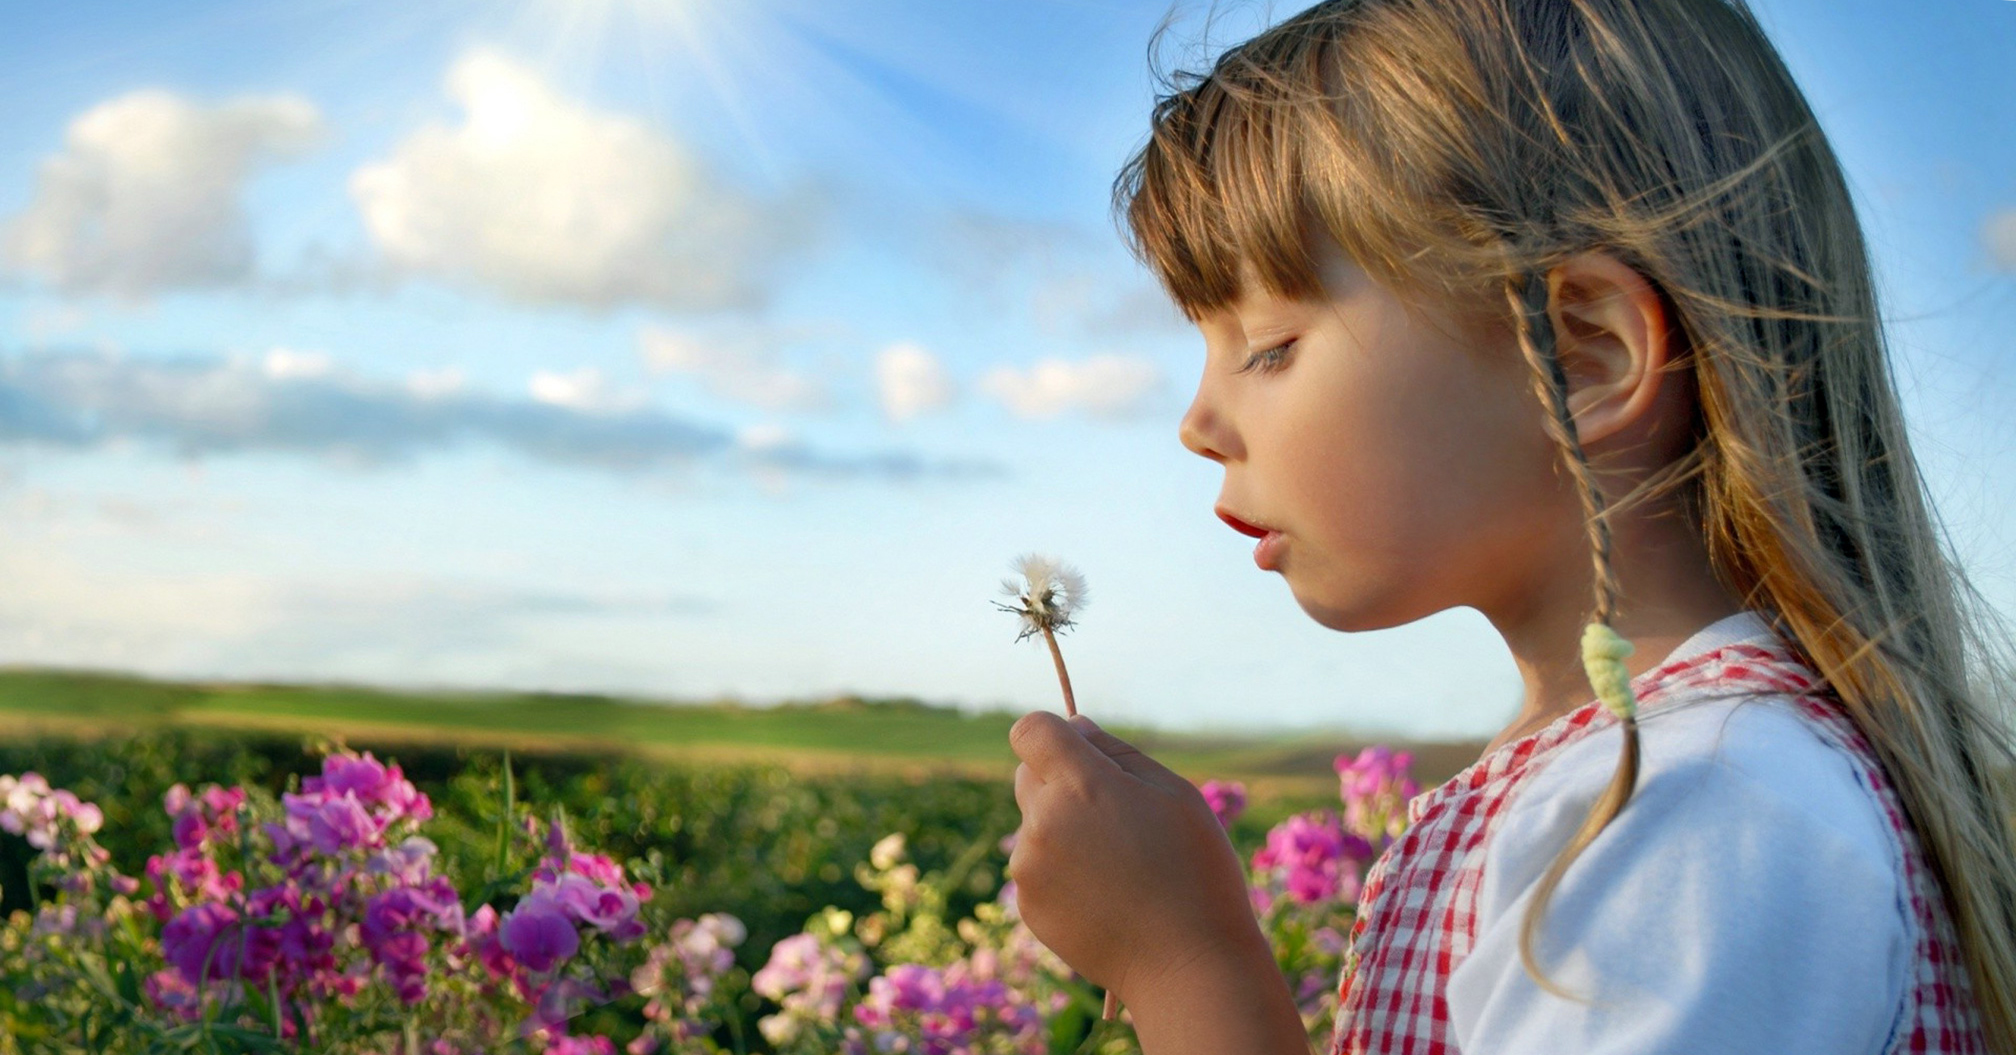 Flower Field Plants And Little Girl Children Wallpaper HD / Desktop and Mobile Background